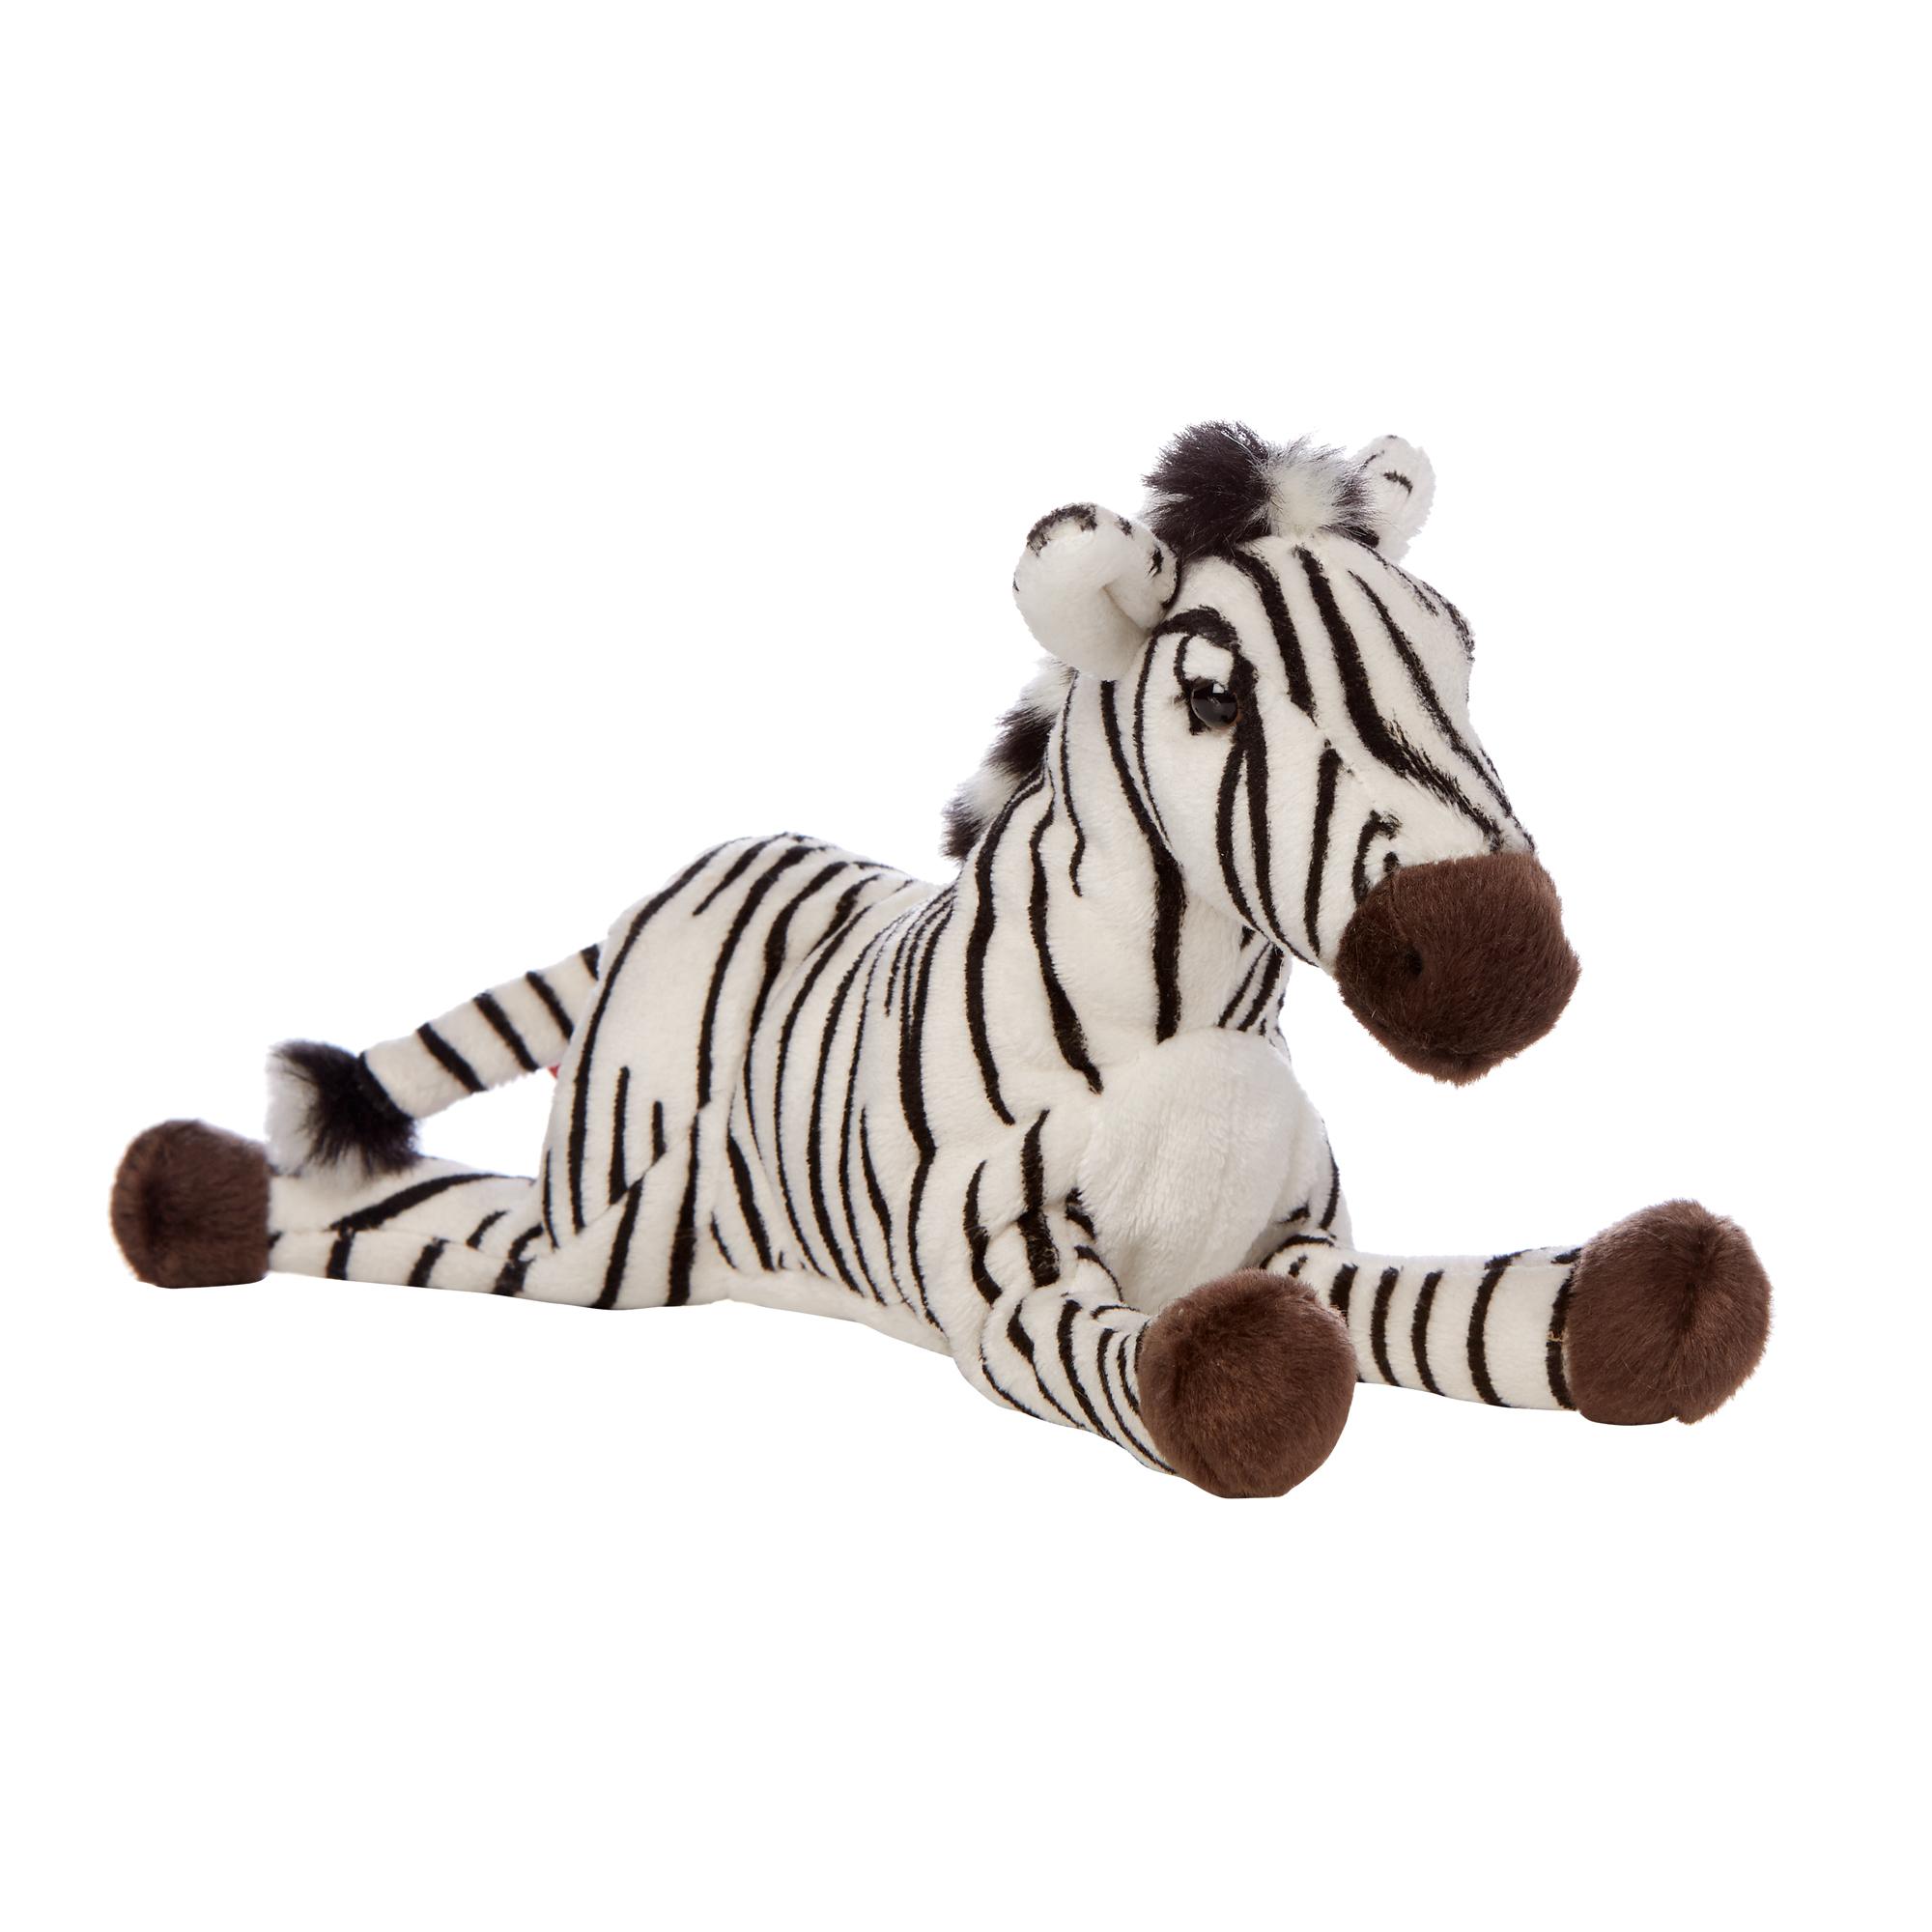 Hamleys Mini Zebra - £9.00 - Hamleys for Toys and Games